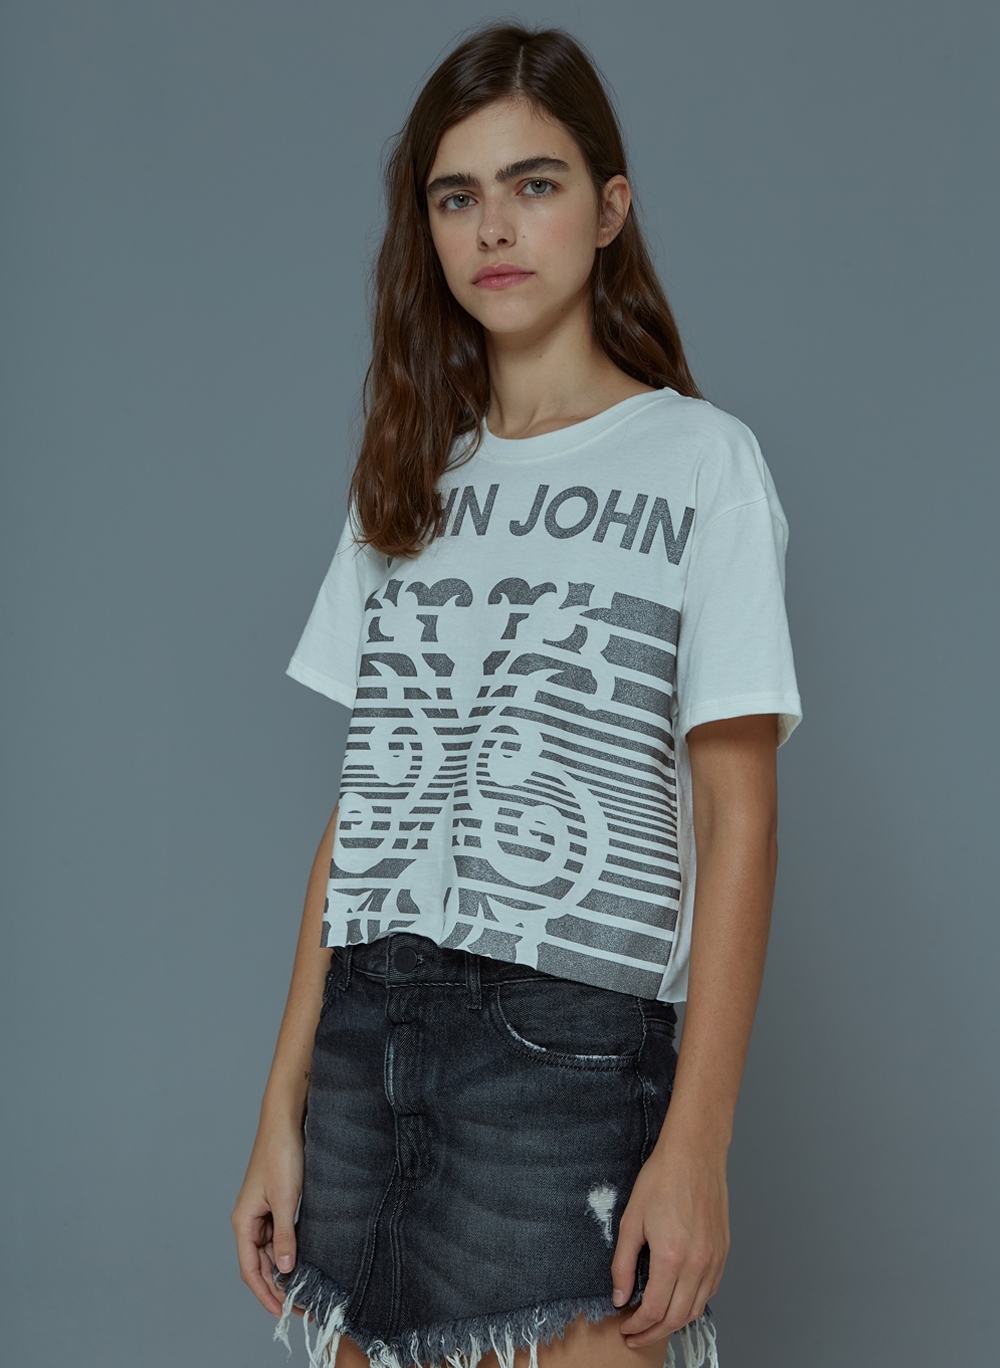 Camiseta John John Mix Feminina 03.62.0213 - Camiseta John John